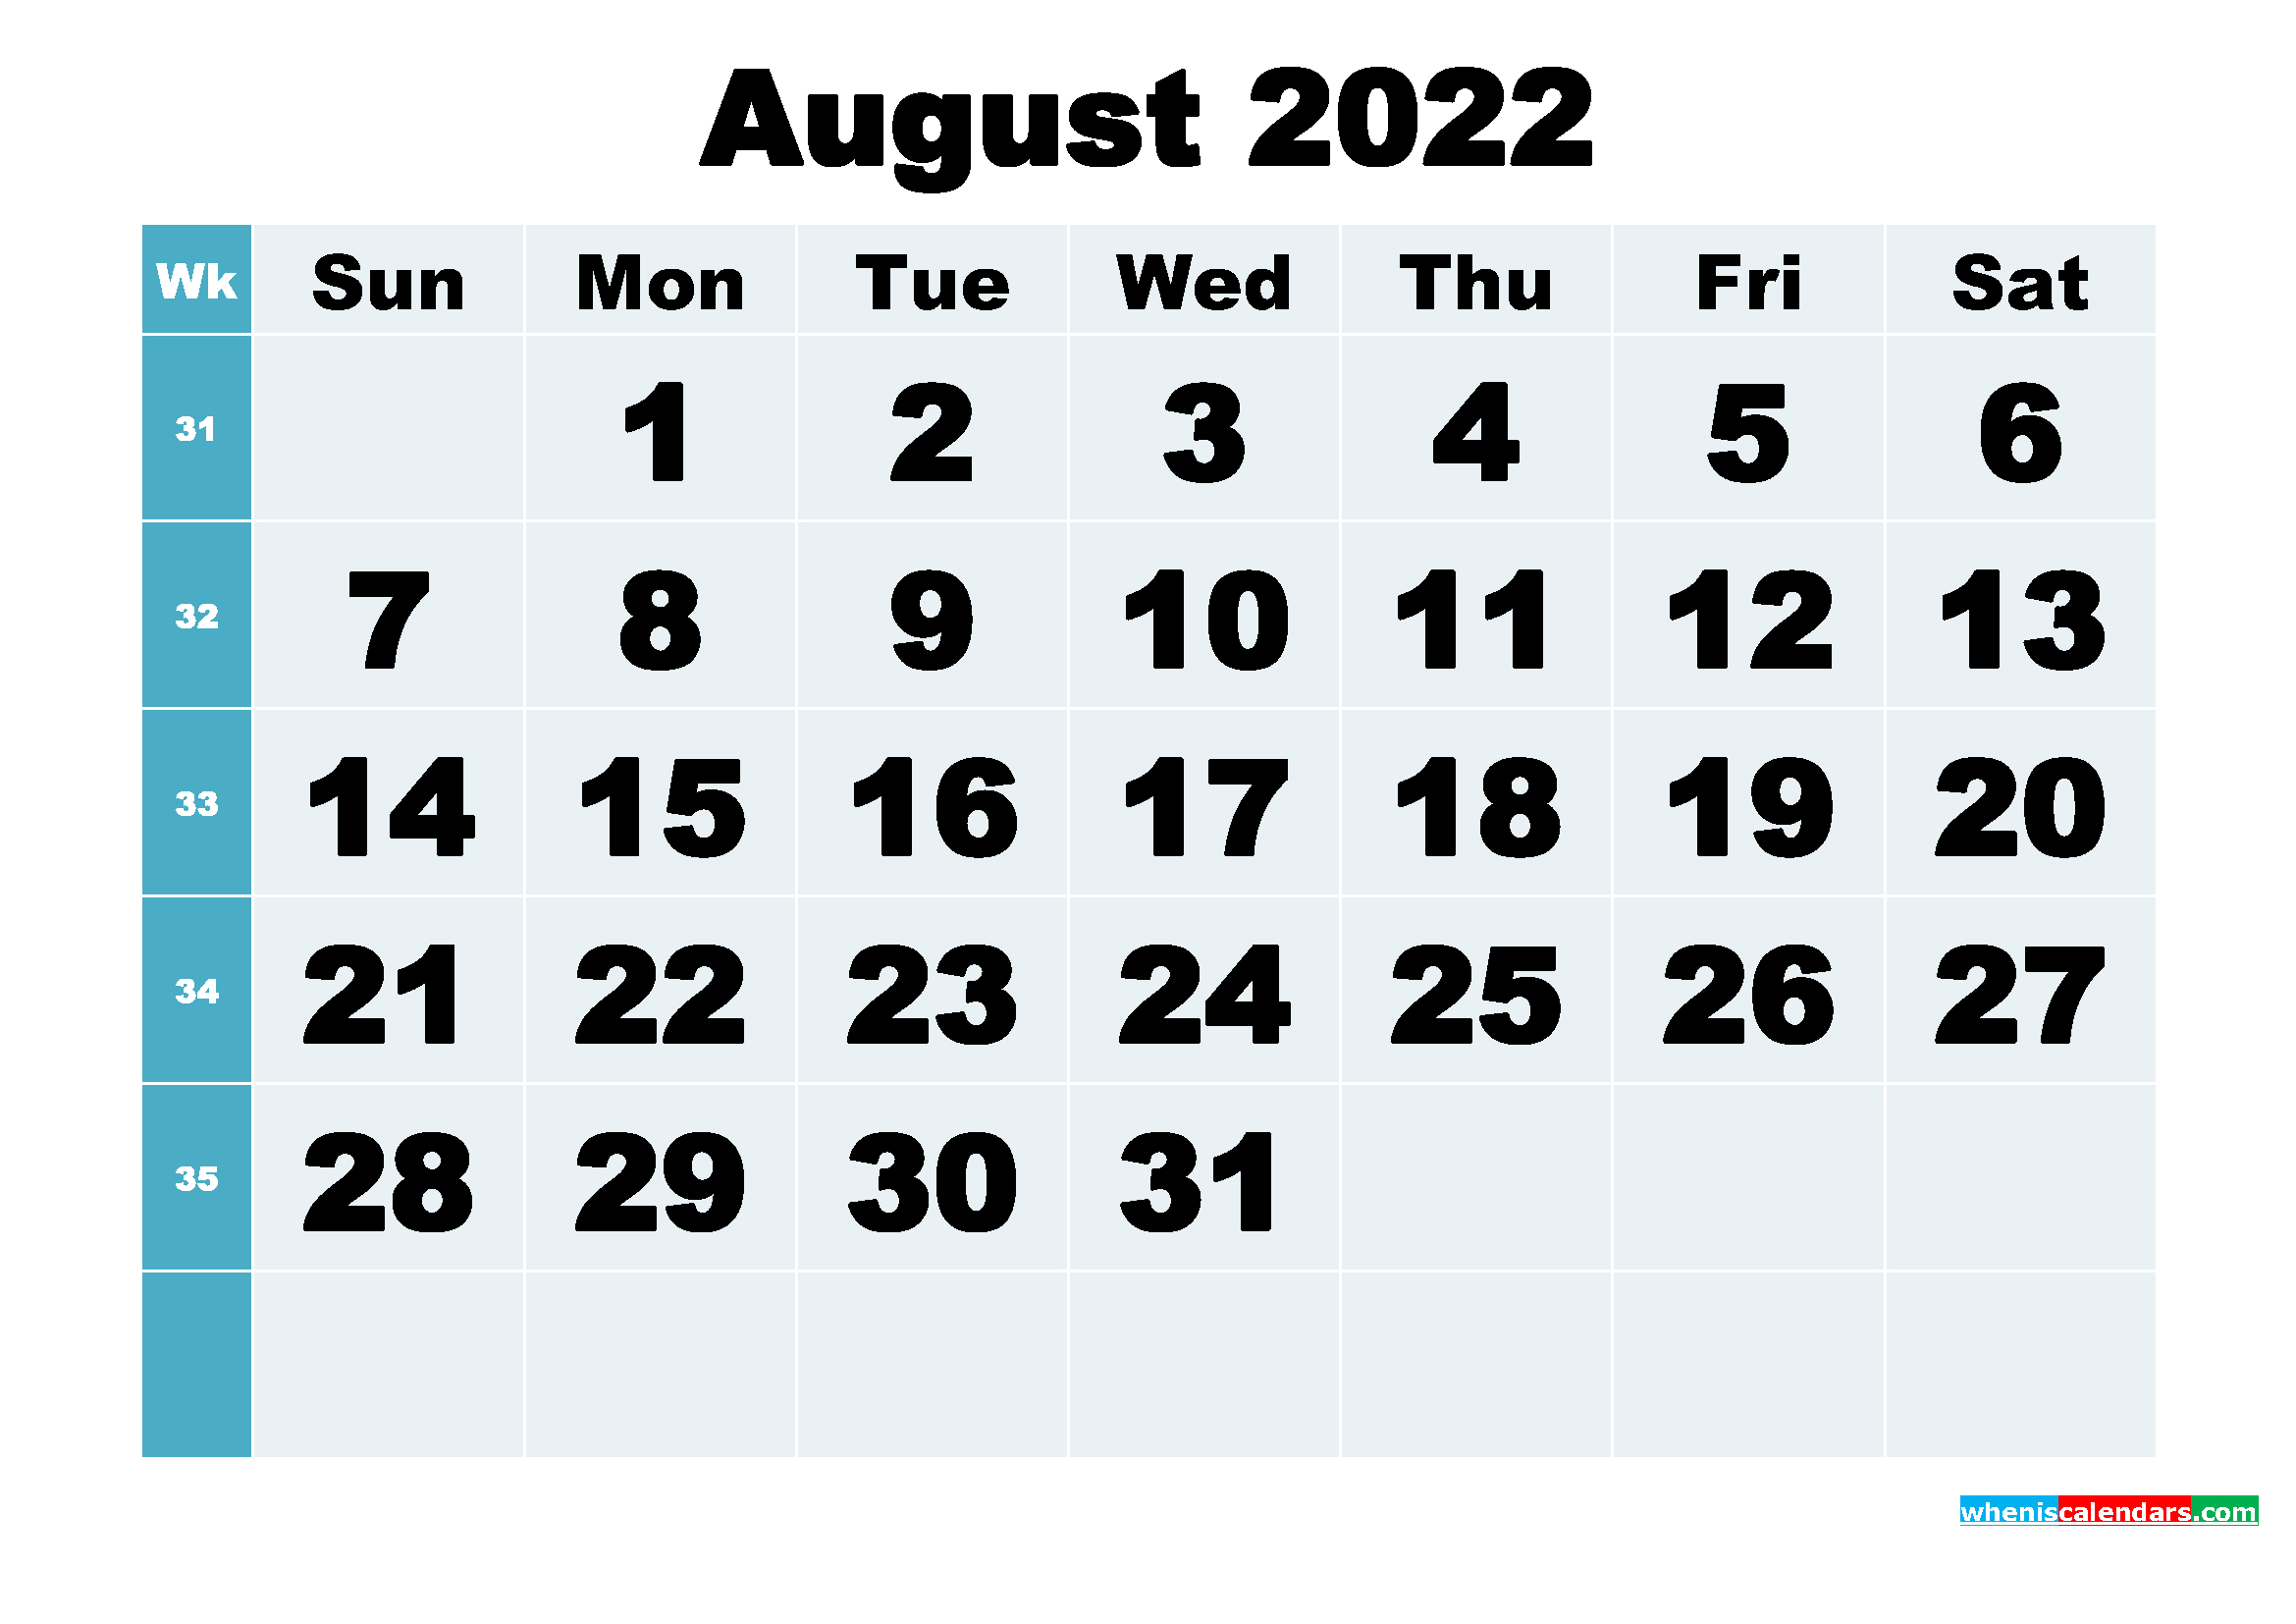 Free Printable August 2022 Calendar Word, Pdf, Image within August 2022 Printable Calendar